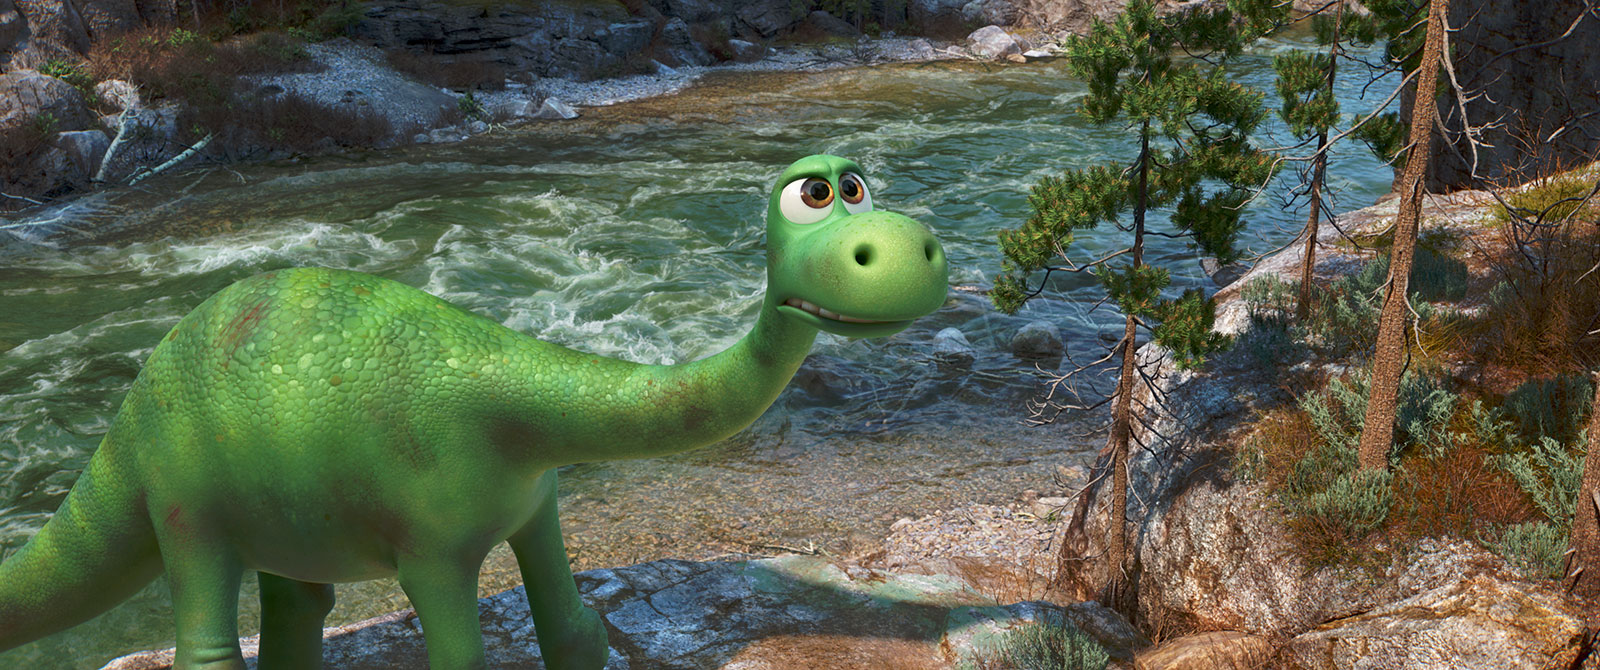 LE VOYAGE D'ARLO - Image 12 du film Disney Pixar 2015 Noël Christmas - Go with the Blog